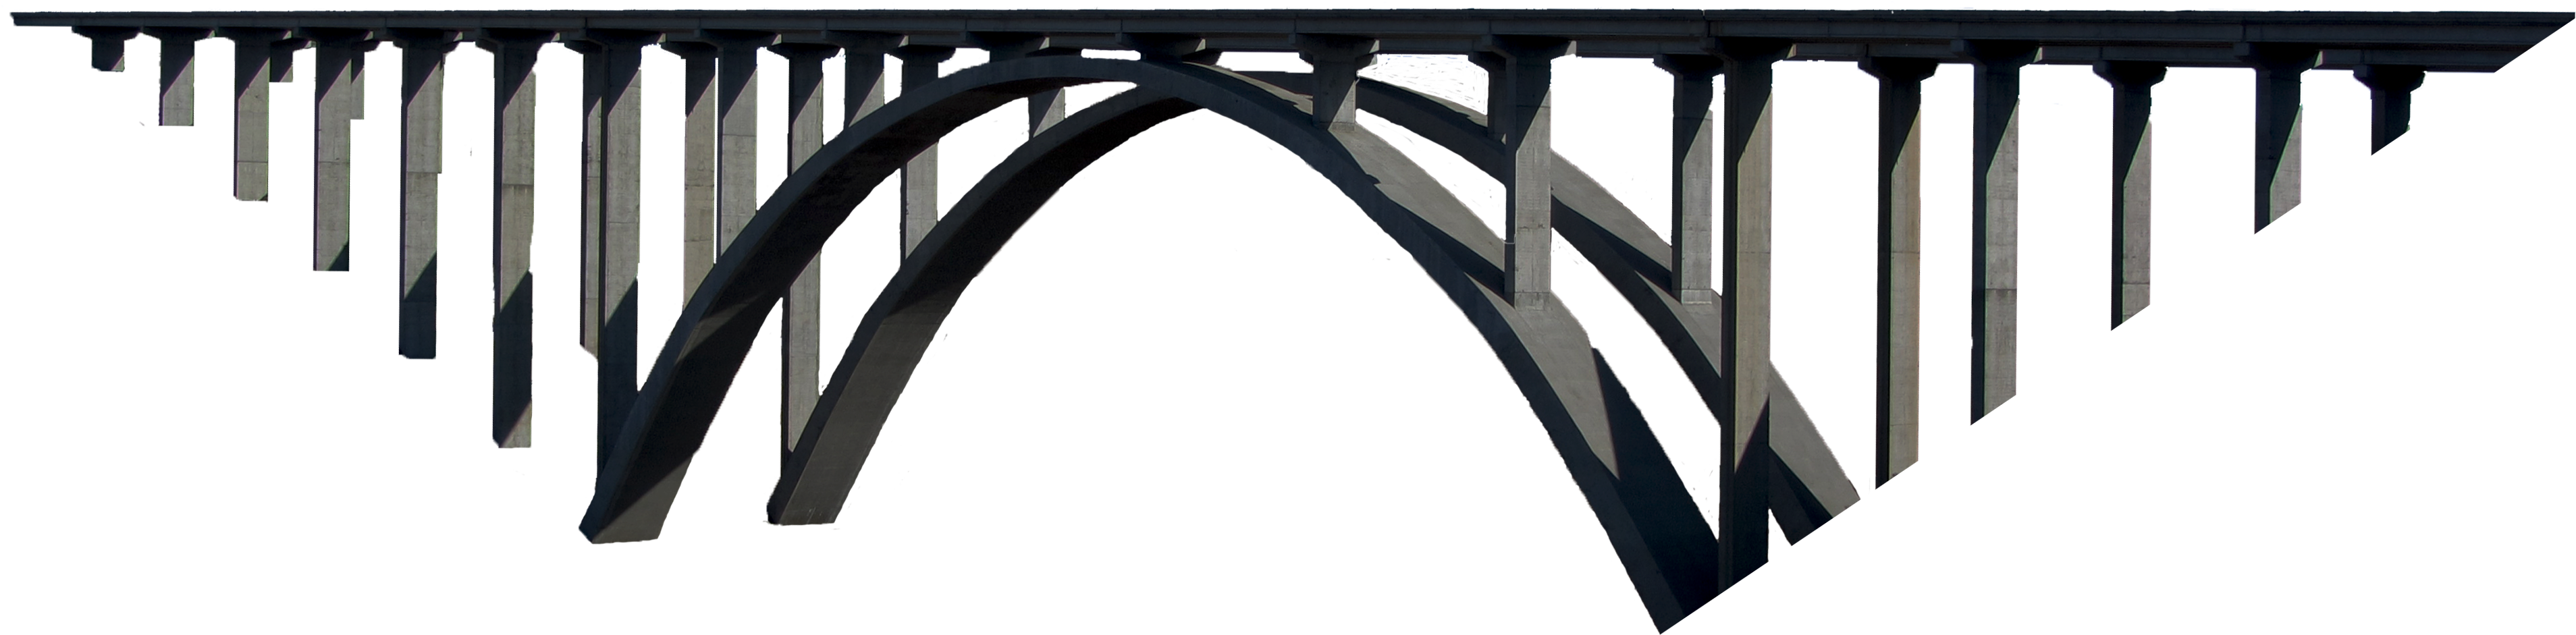 Steel Arch Bridge Structure PNG